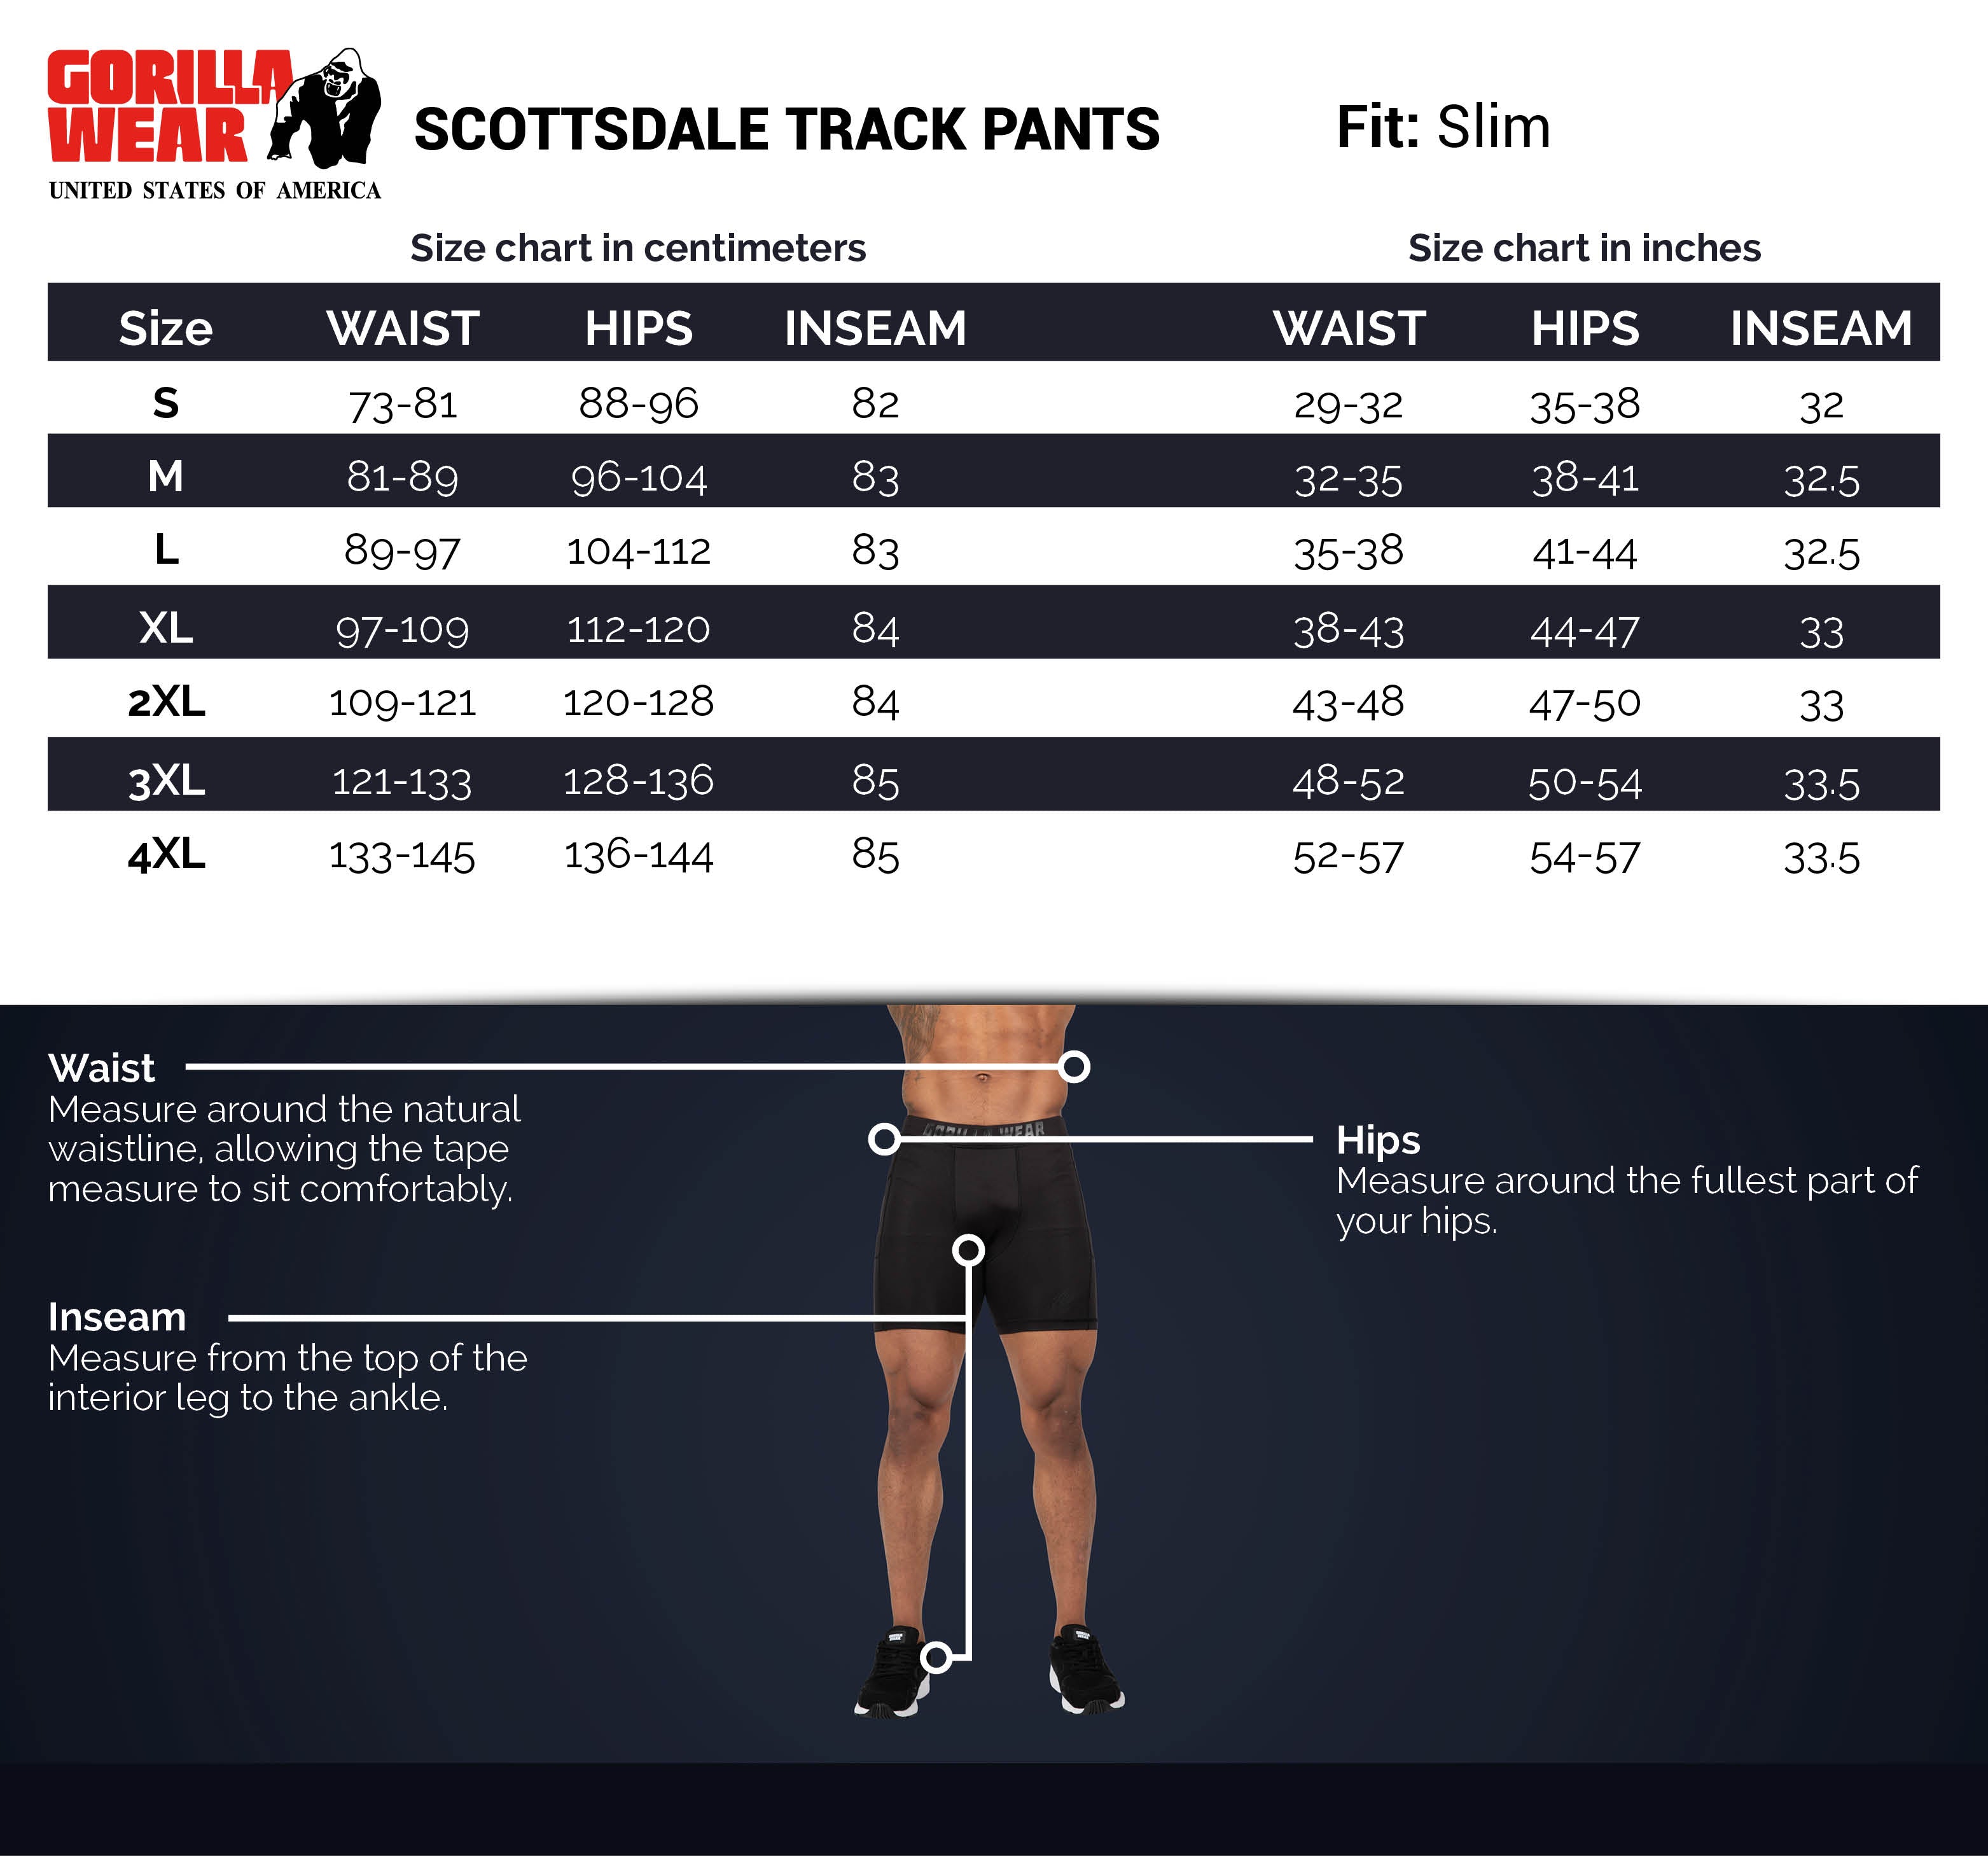 Buyr.com | Sports & Fitness | Reebok Men's Tremont Track Pants -  Performance Activewear Running Bottoms- Dark Shade Charcoal/Grey, Small